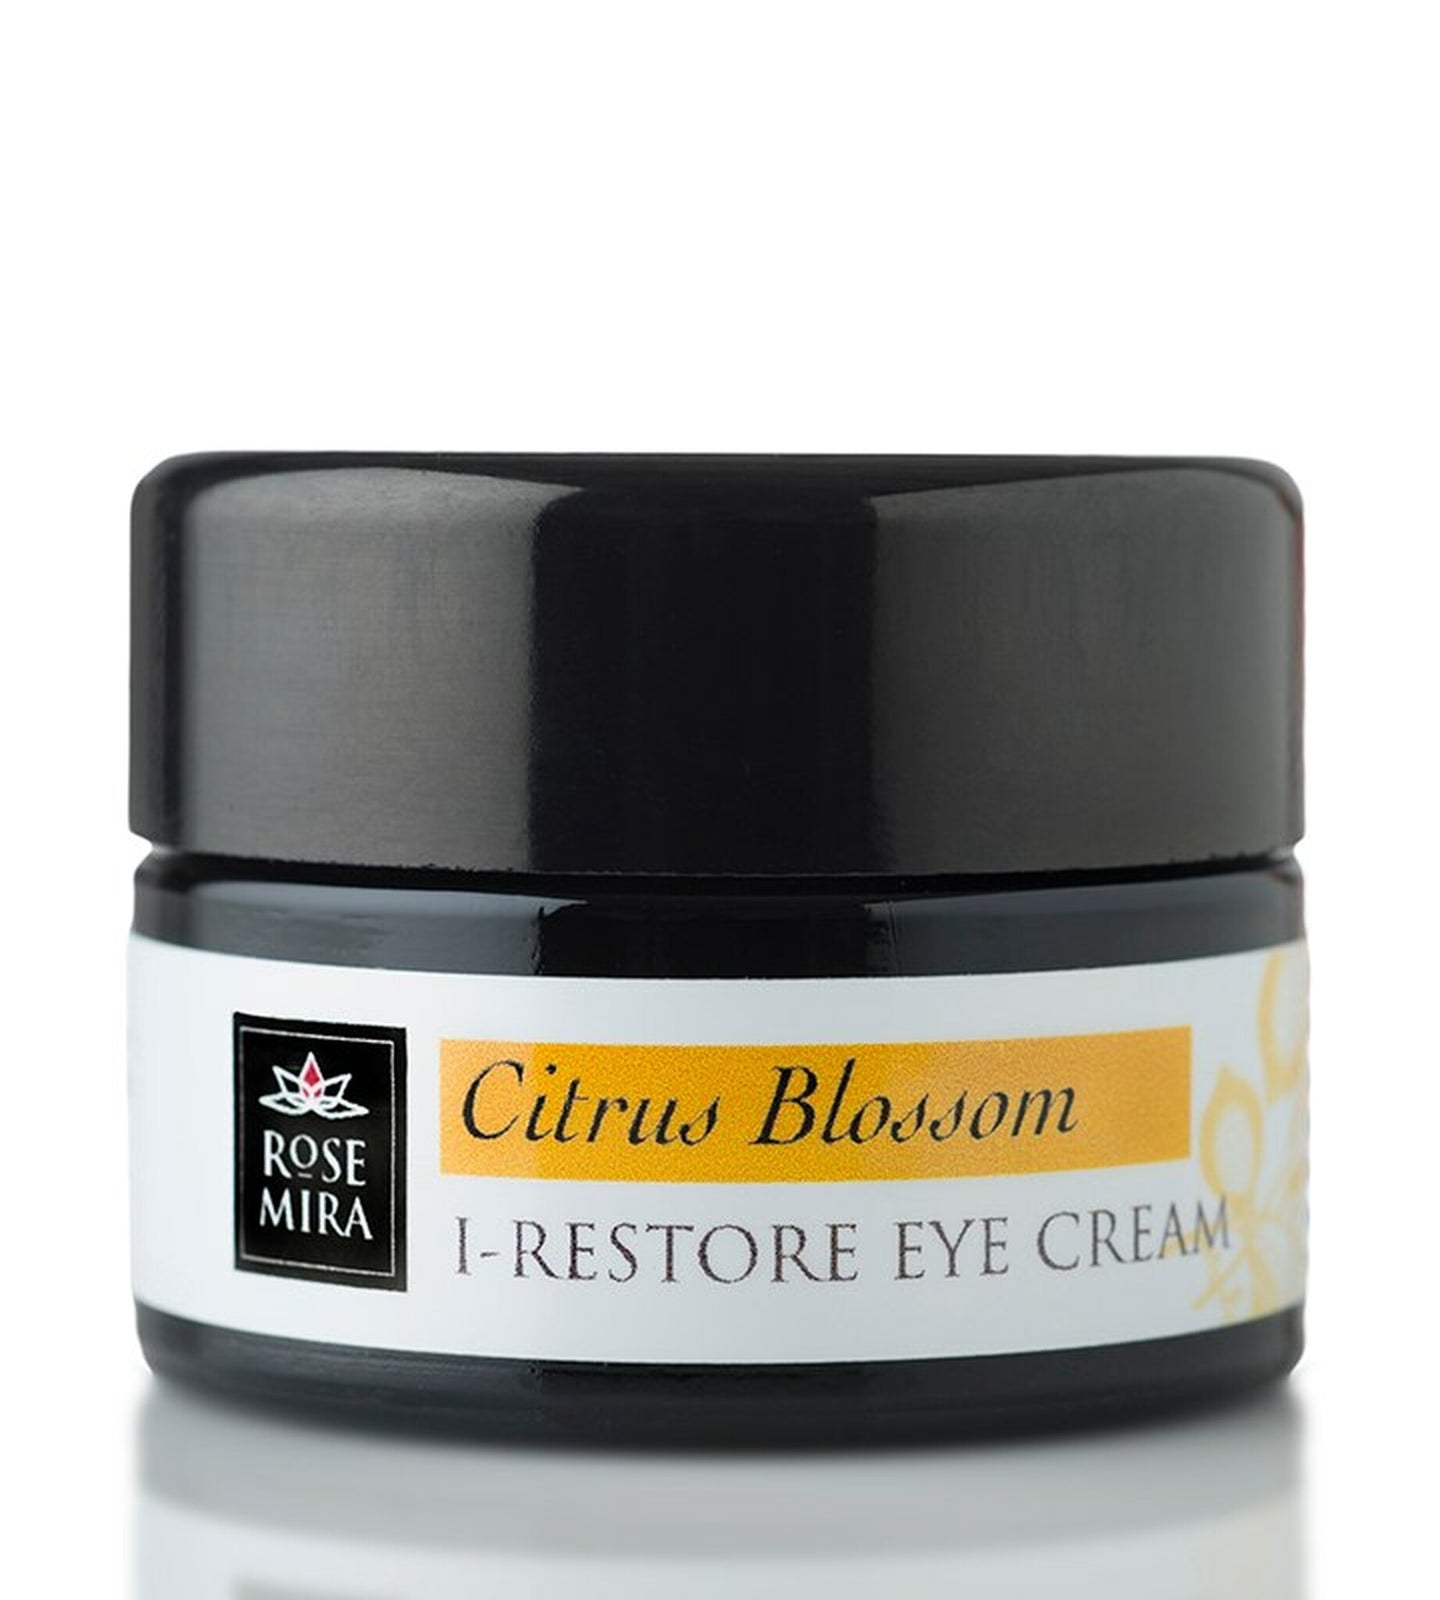 Citrus Blossom I-Restore Eye Cream